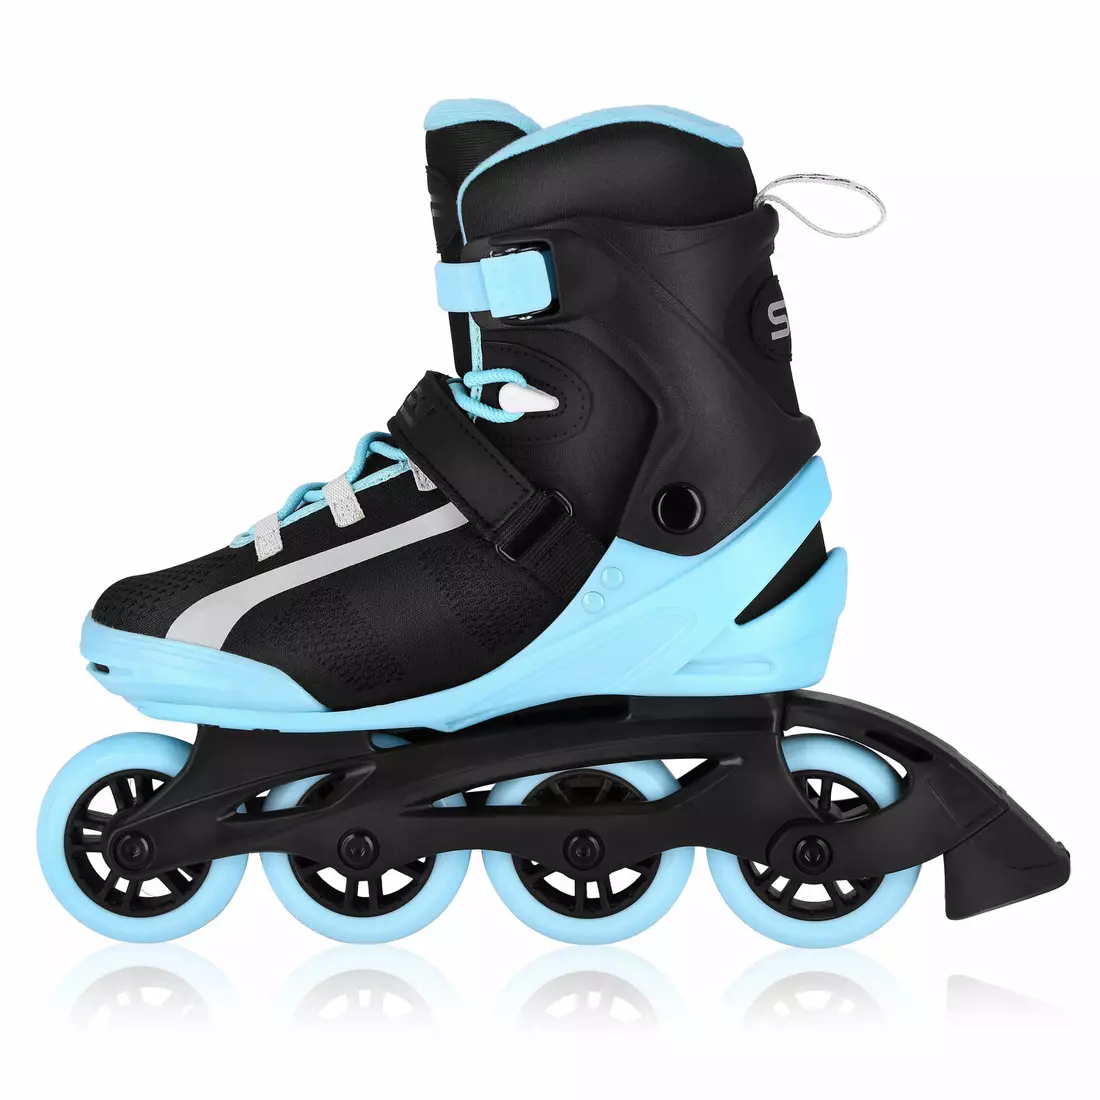 SPOKEY MrsFIT women's inline skates, blue and black